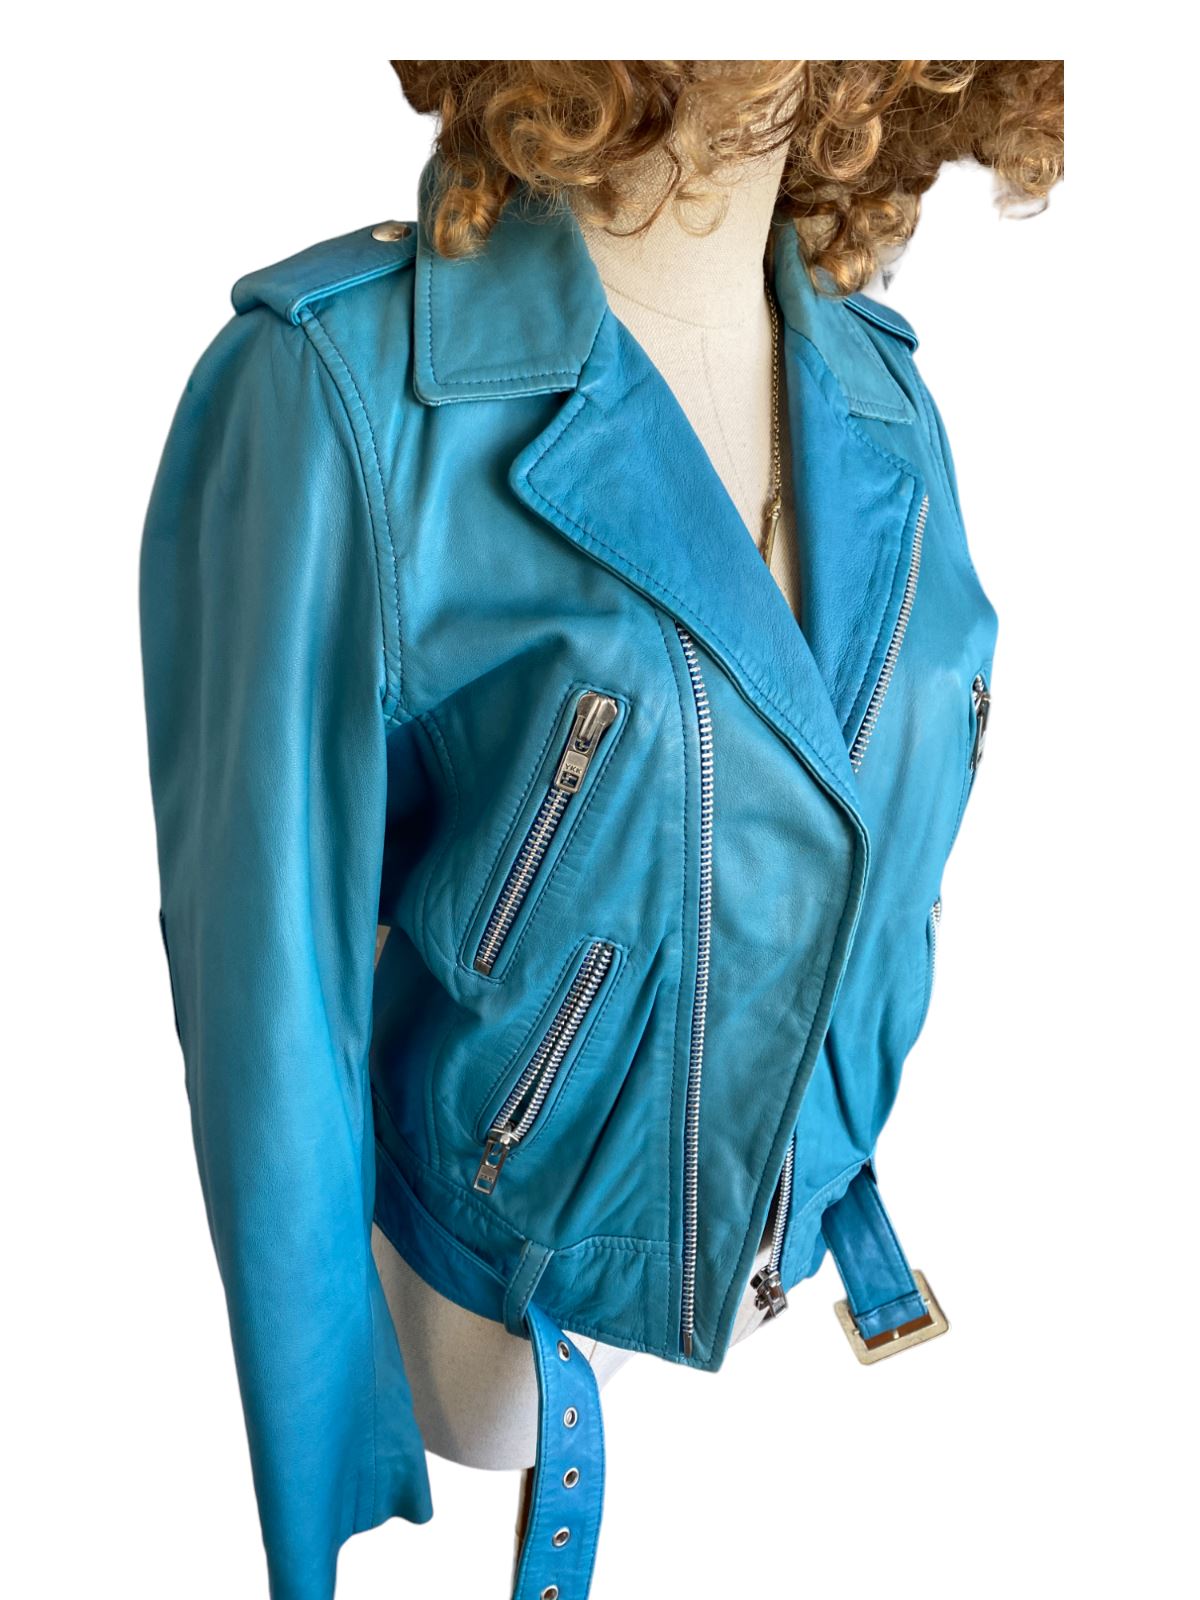 MAJE Lambskin Leather Motorcycle Jacket | Sz 38, Blue $1,400 RRP